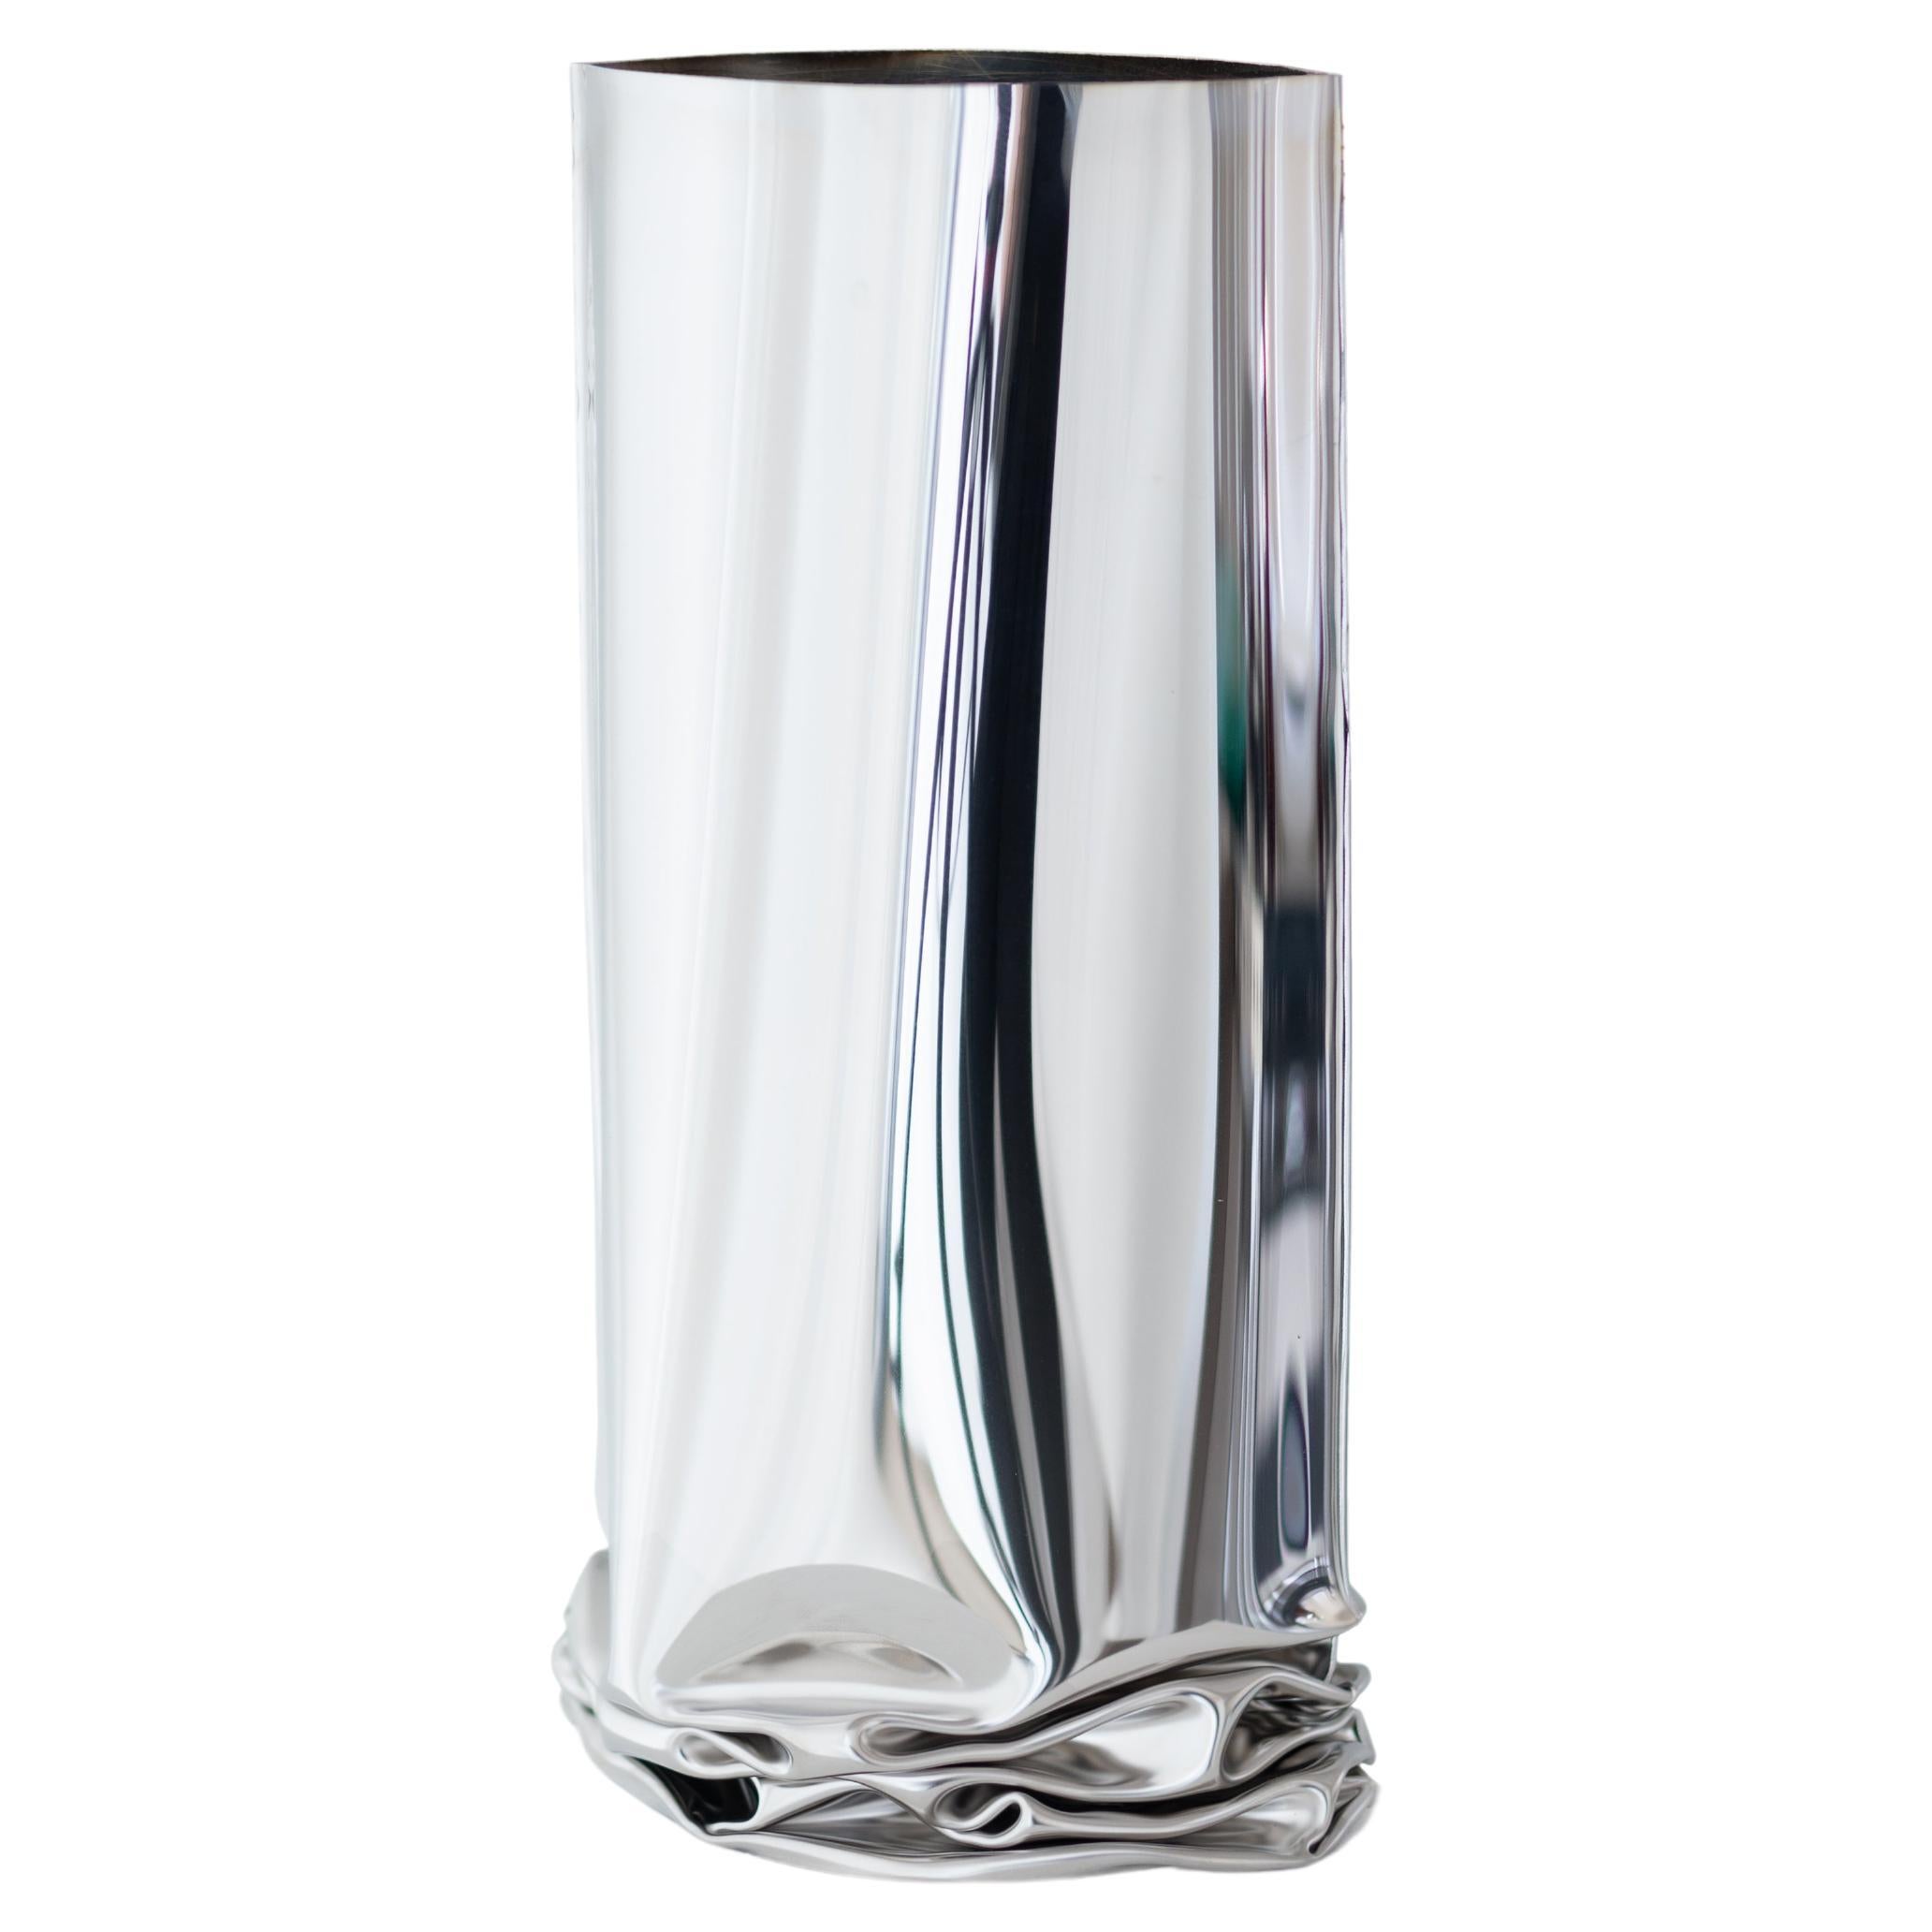 Contemporary Vase, 'Crash Vase' by Zieta, Large, Stainless Steel